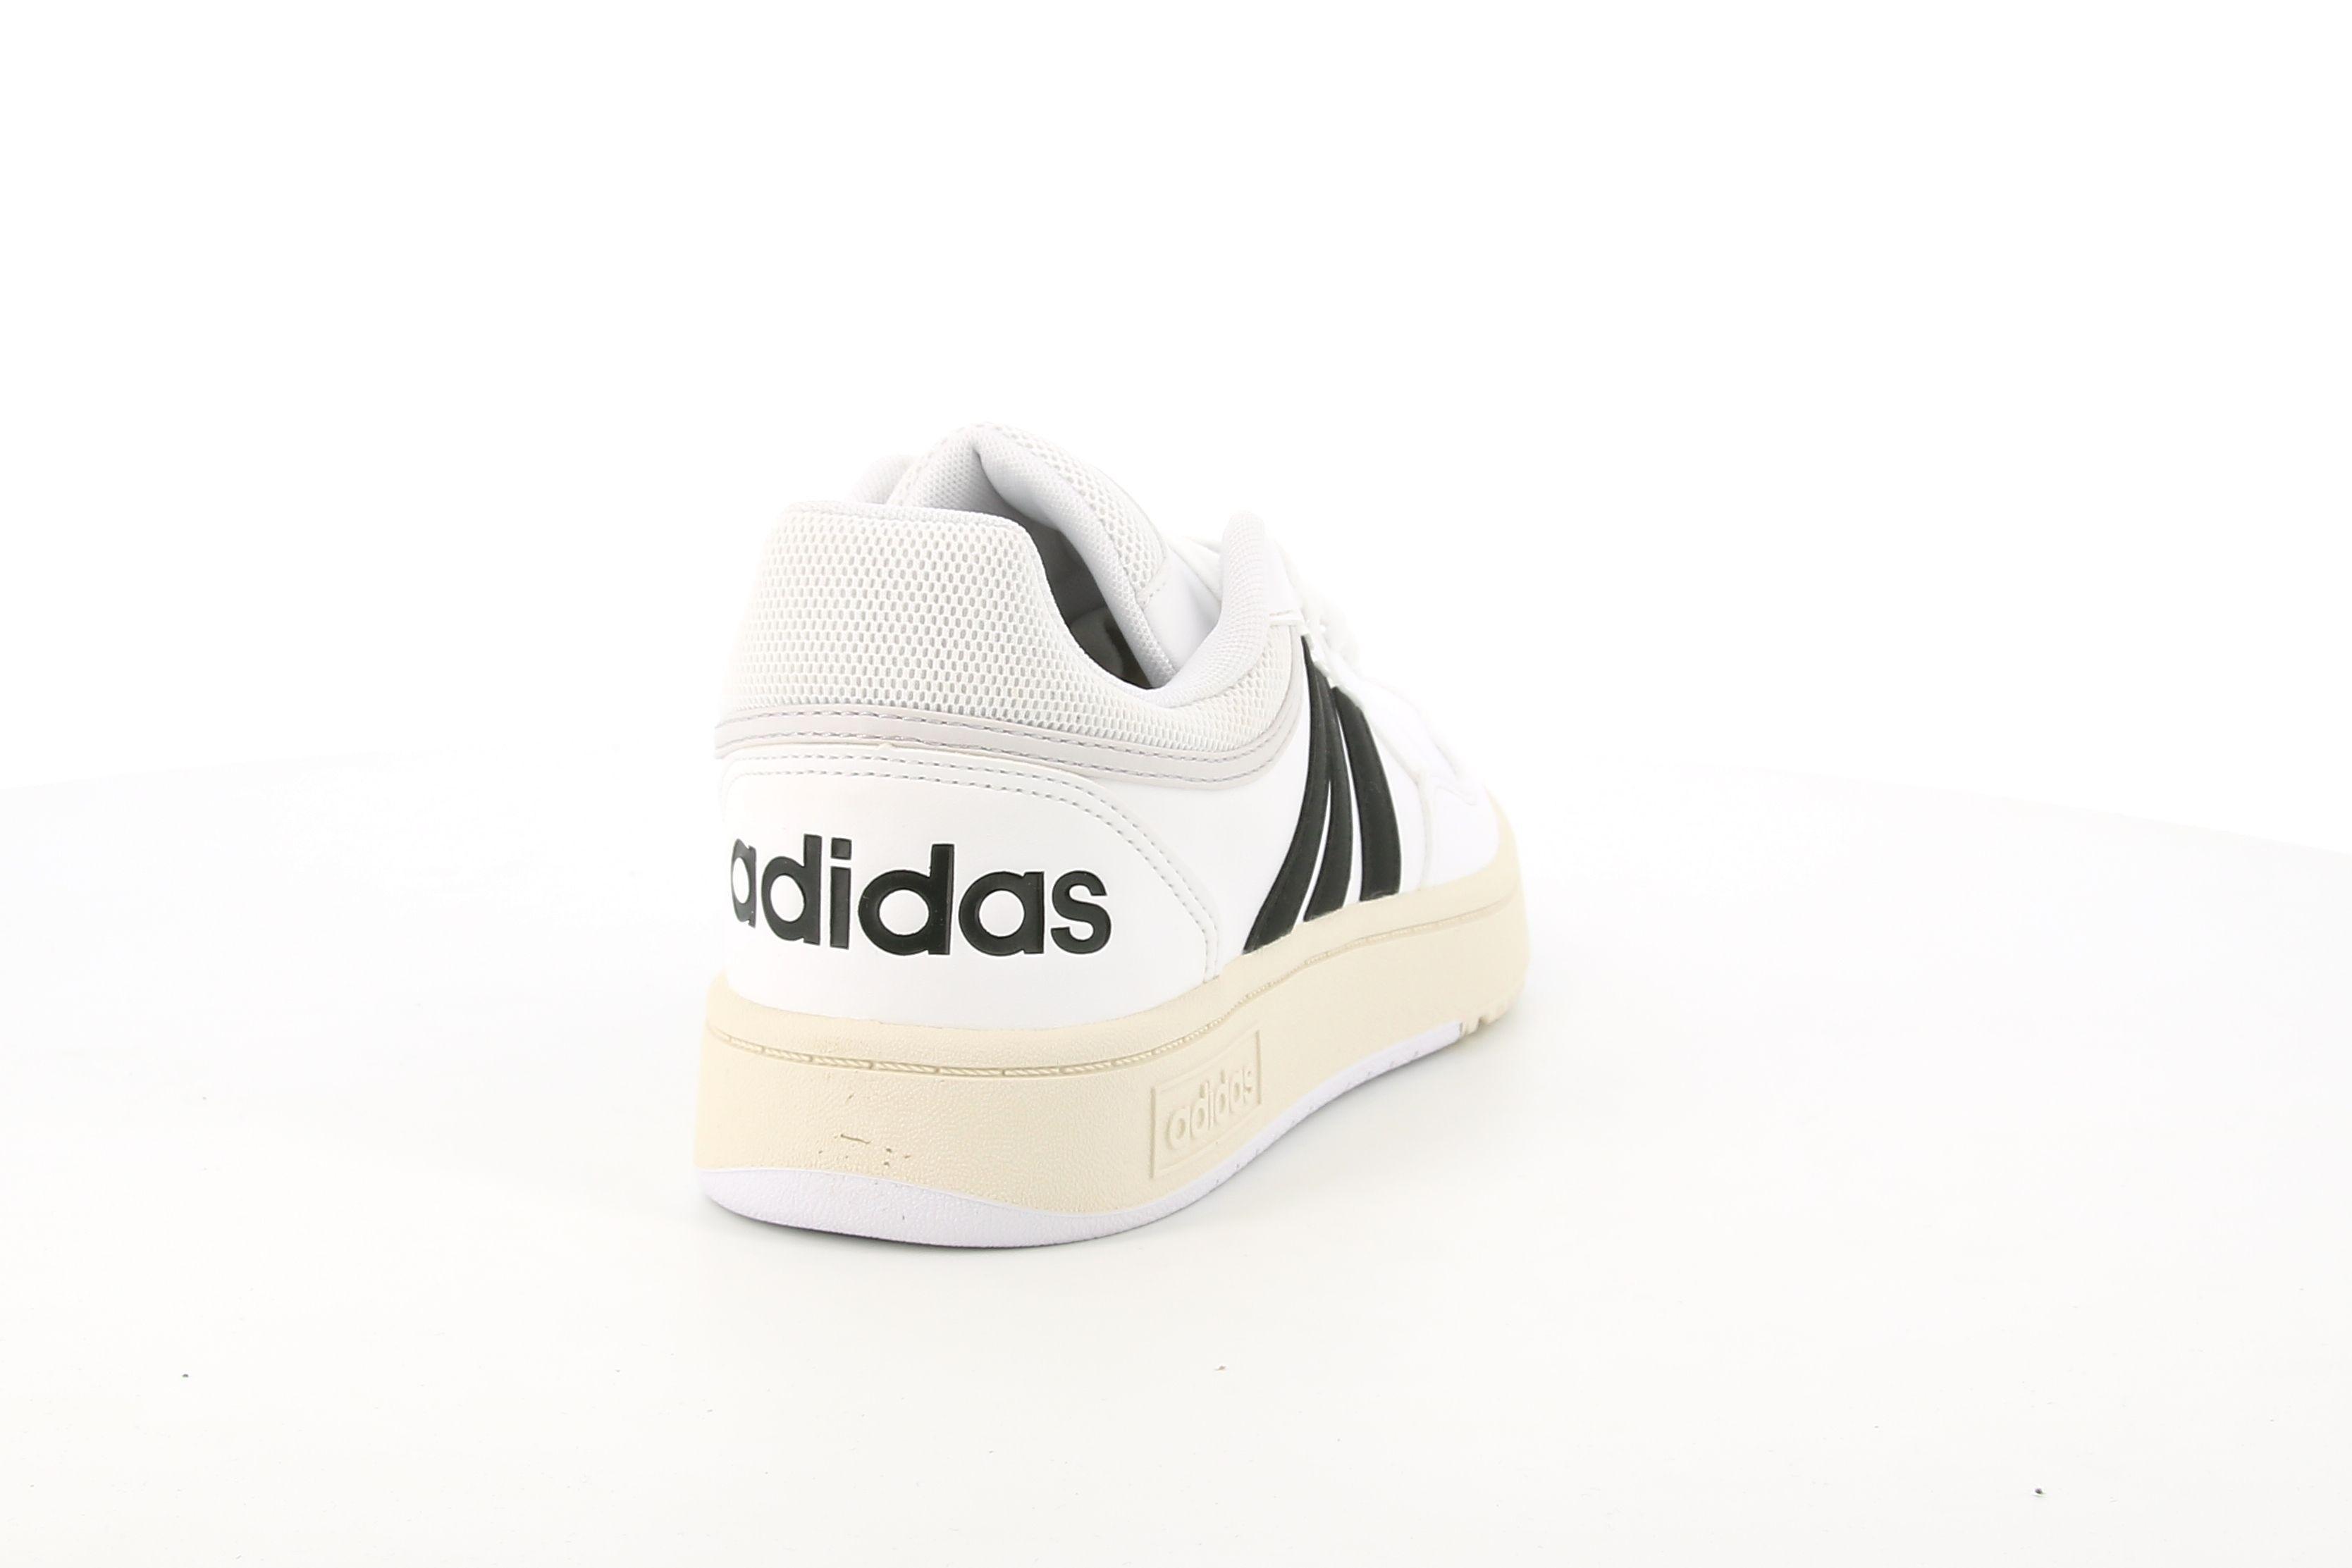 adidas sneakers adidas hoops 3.0  gy5434. da uomo, colore bianco